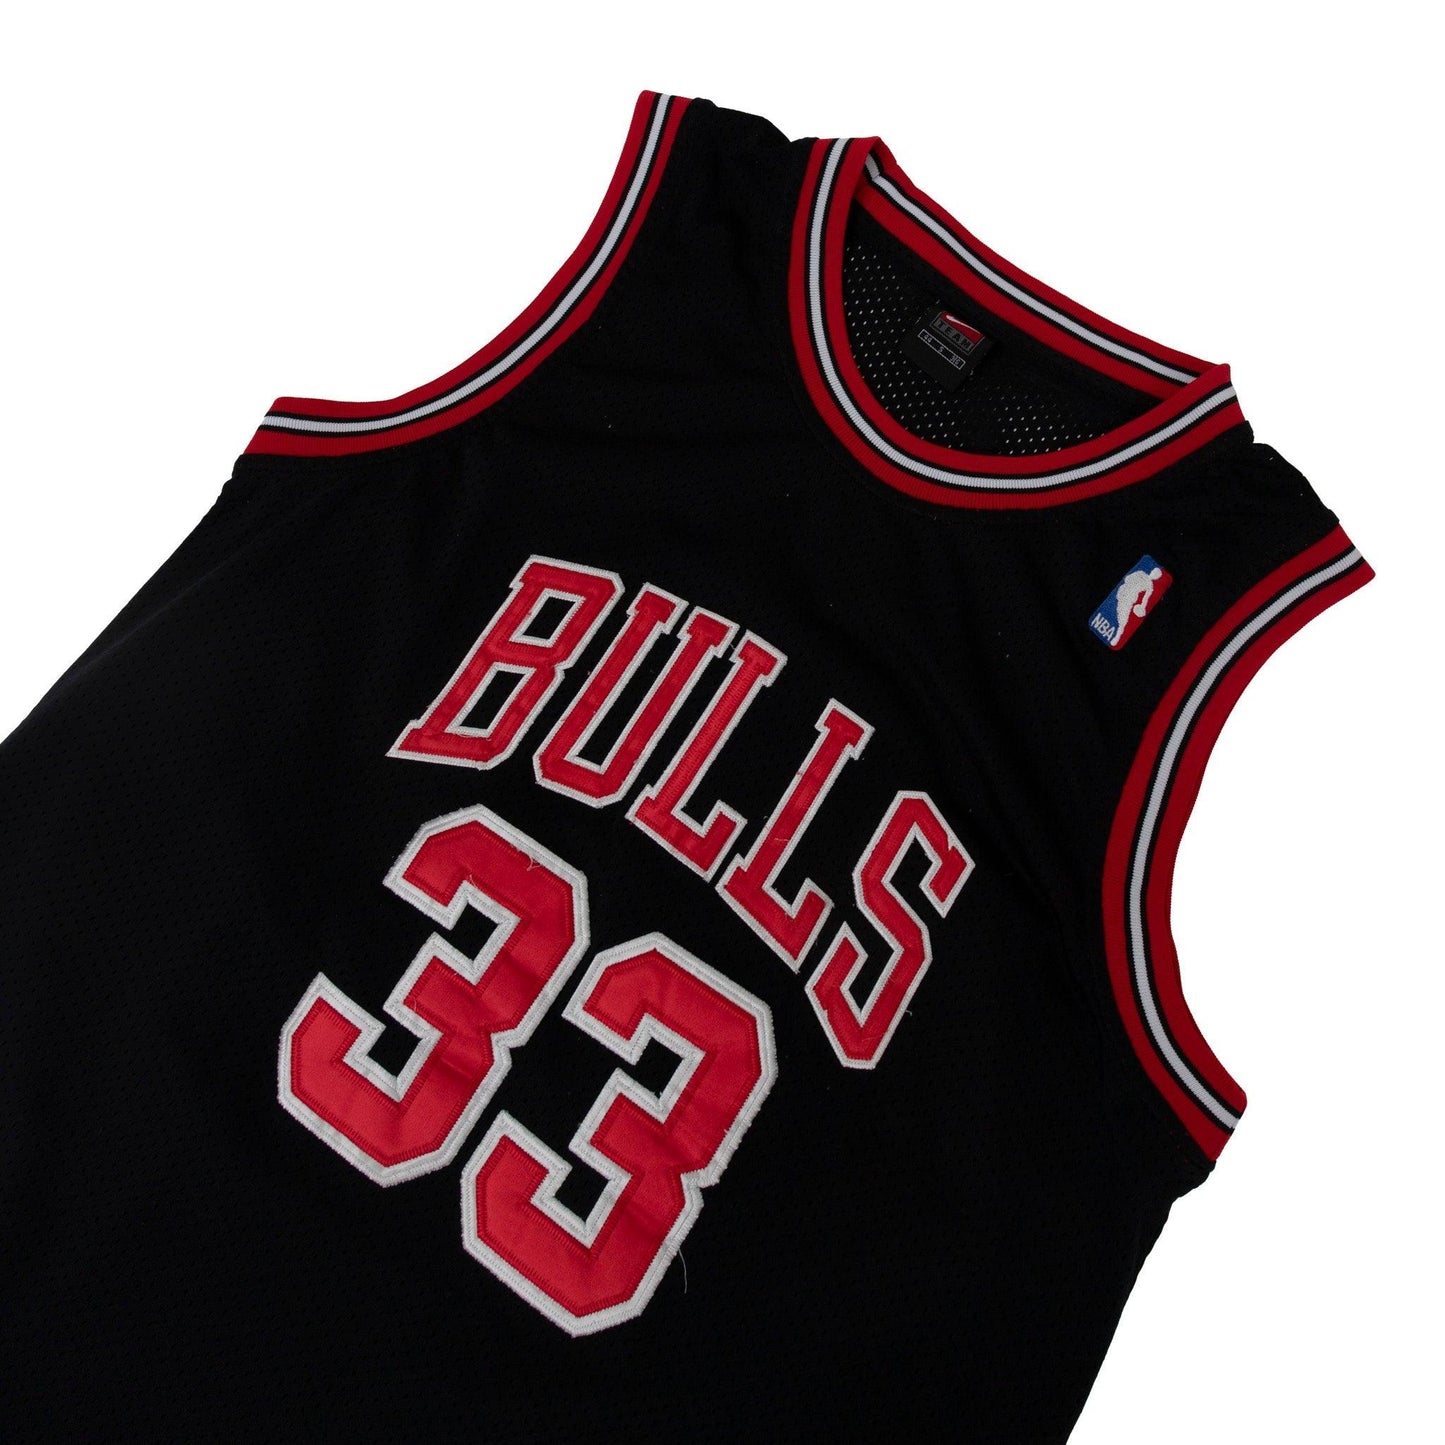 Chicago Bulls Pippen Vest - Known Source